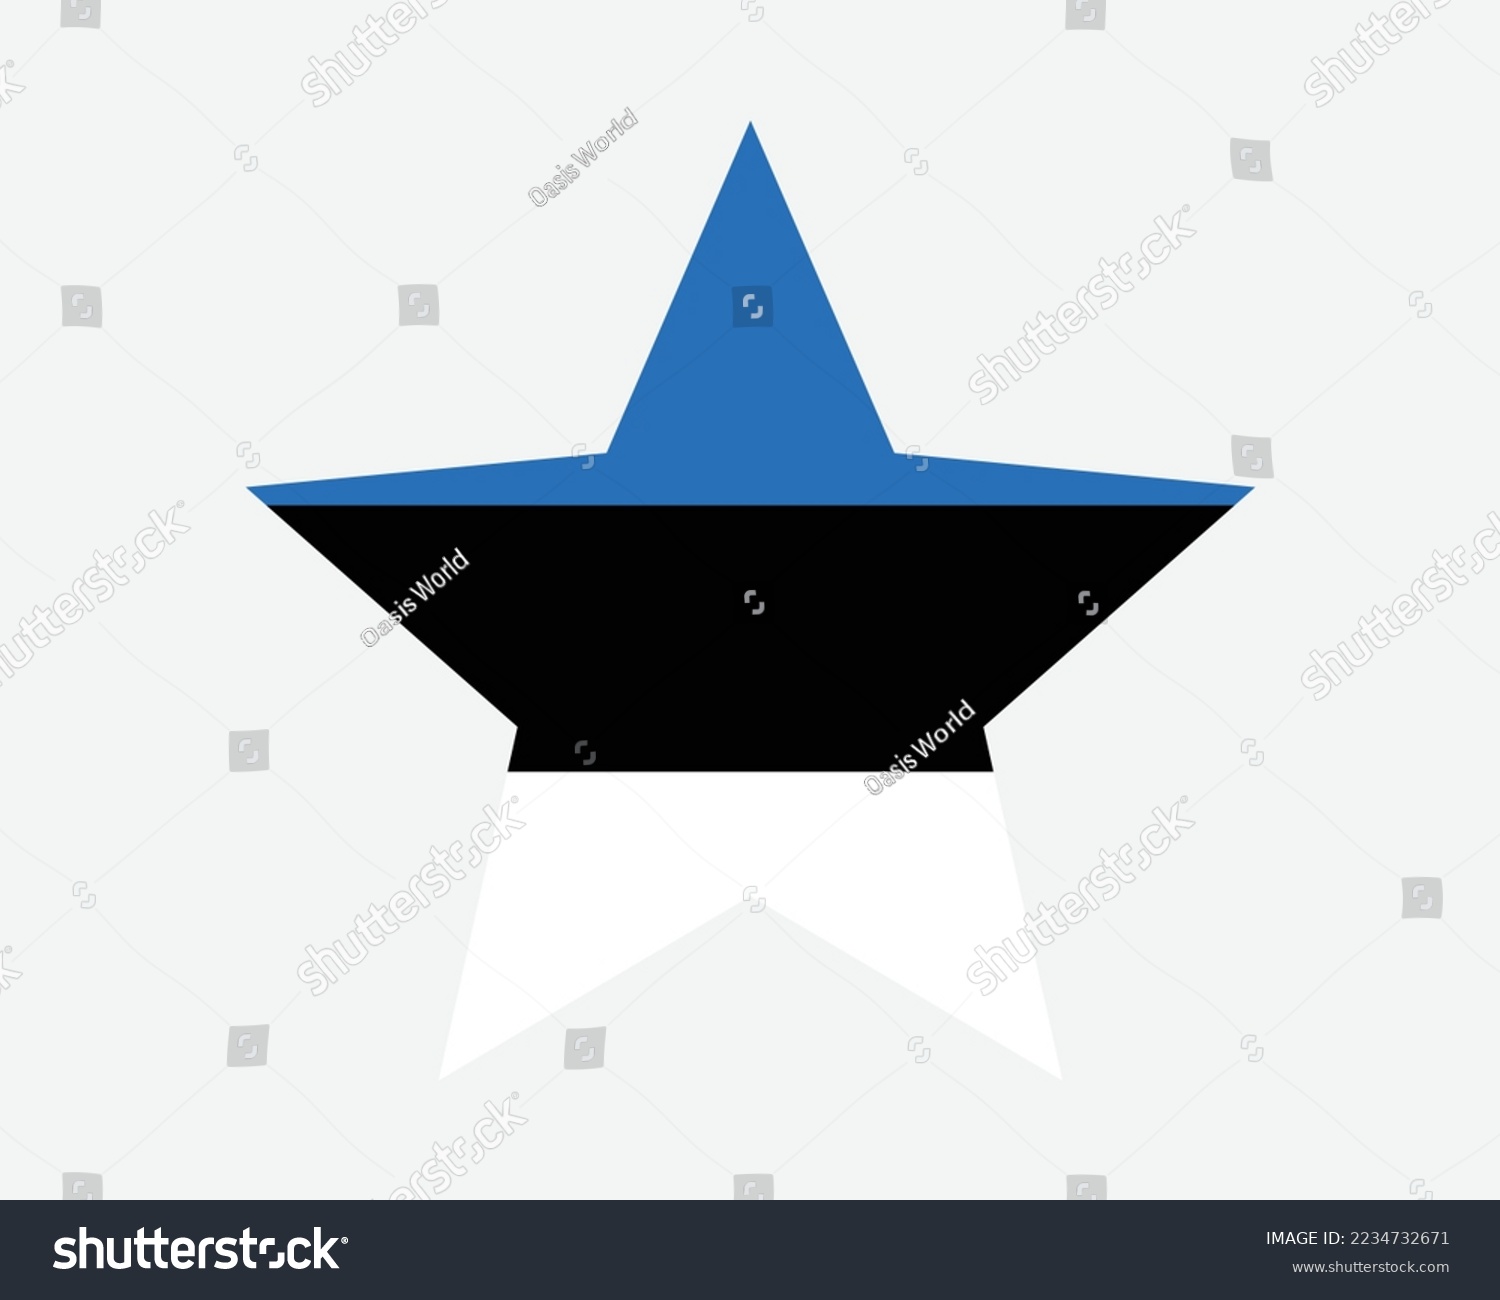 SVG of Estonia Star Flag. Estonian Star Shape Flag. Republic of Estonia Country National Banner Icon Symbol Vector Flat Artwork Graphic Illustration svg